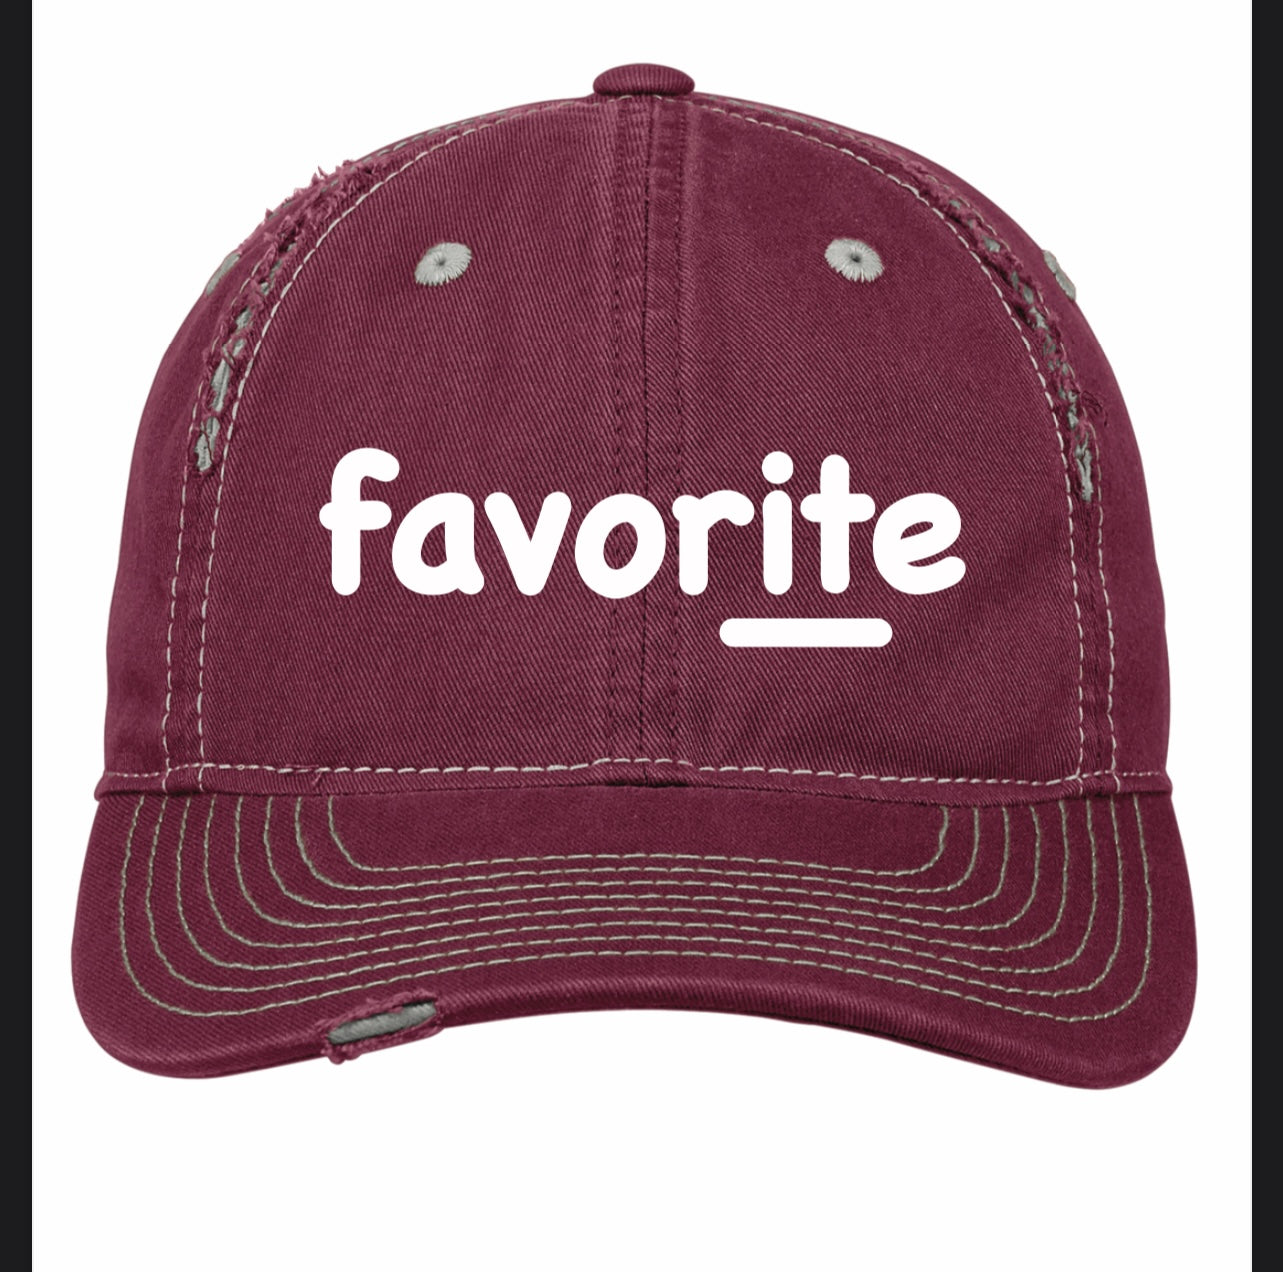 favorite hat!